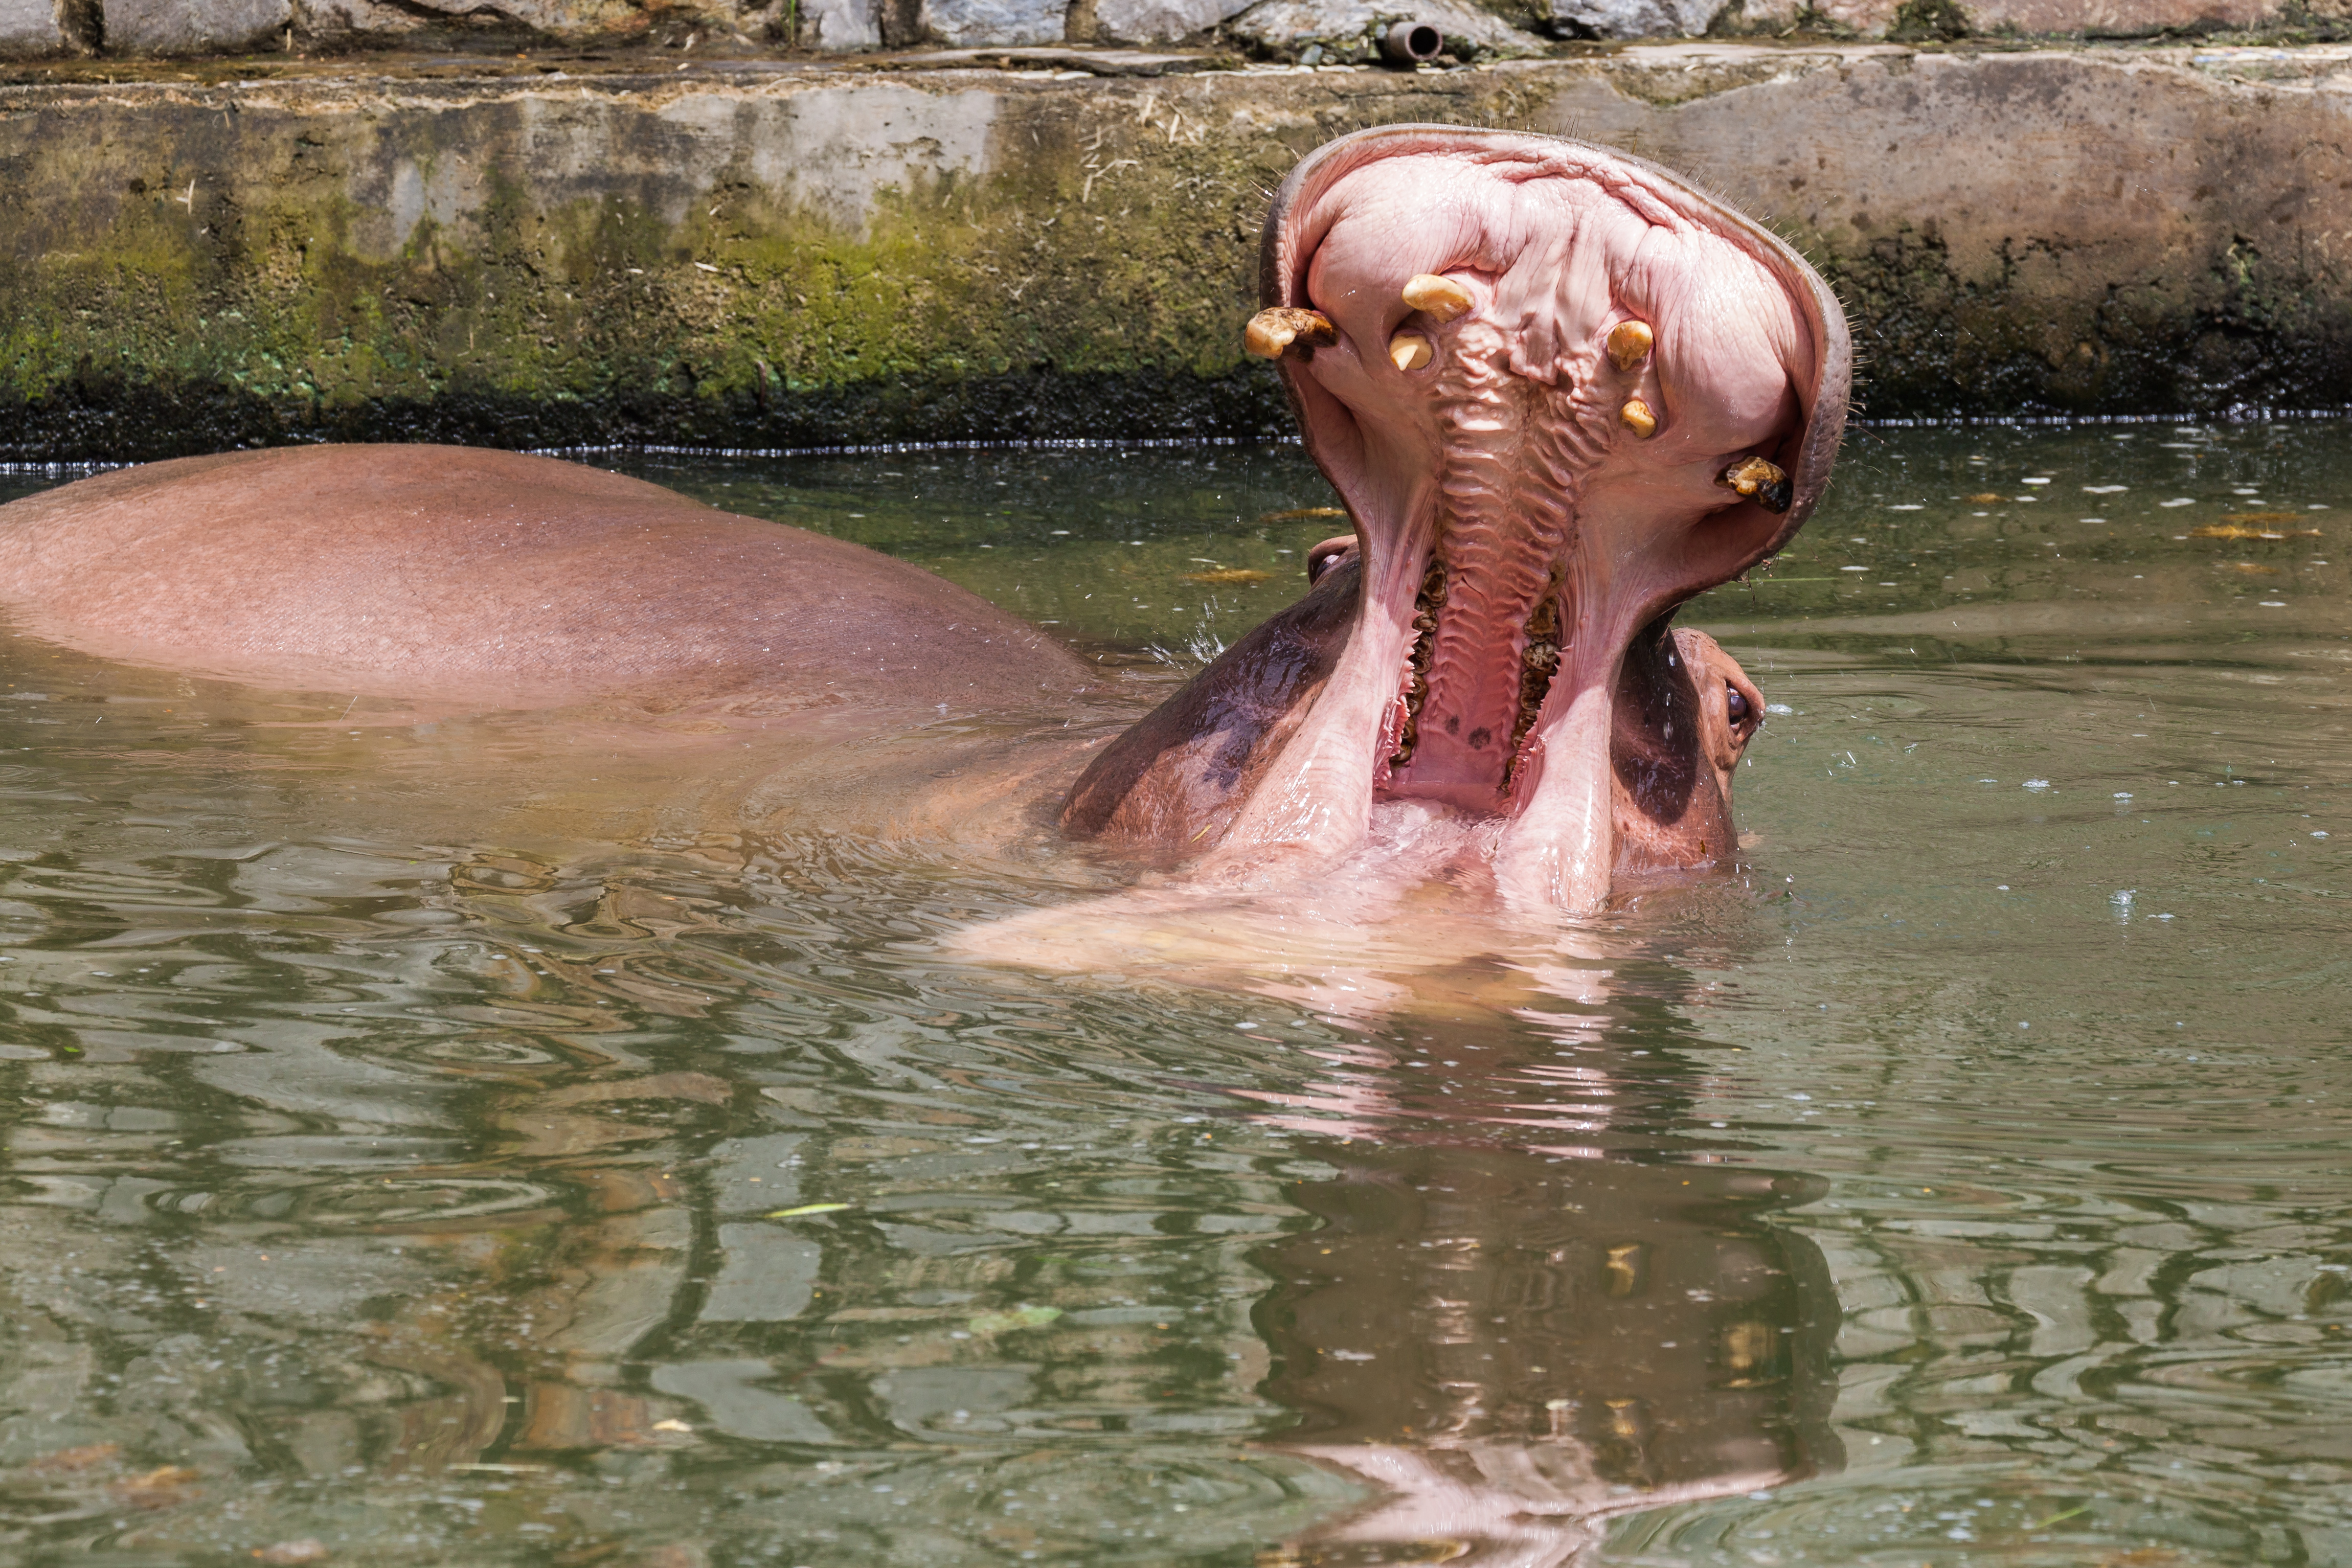 Hipopótamo (Hippopotamus amphibius), Zoo de Ciudad Ho Chi Minh, Vietnam, 2013-08-14, DD 04